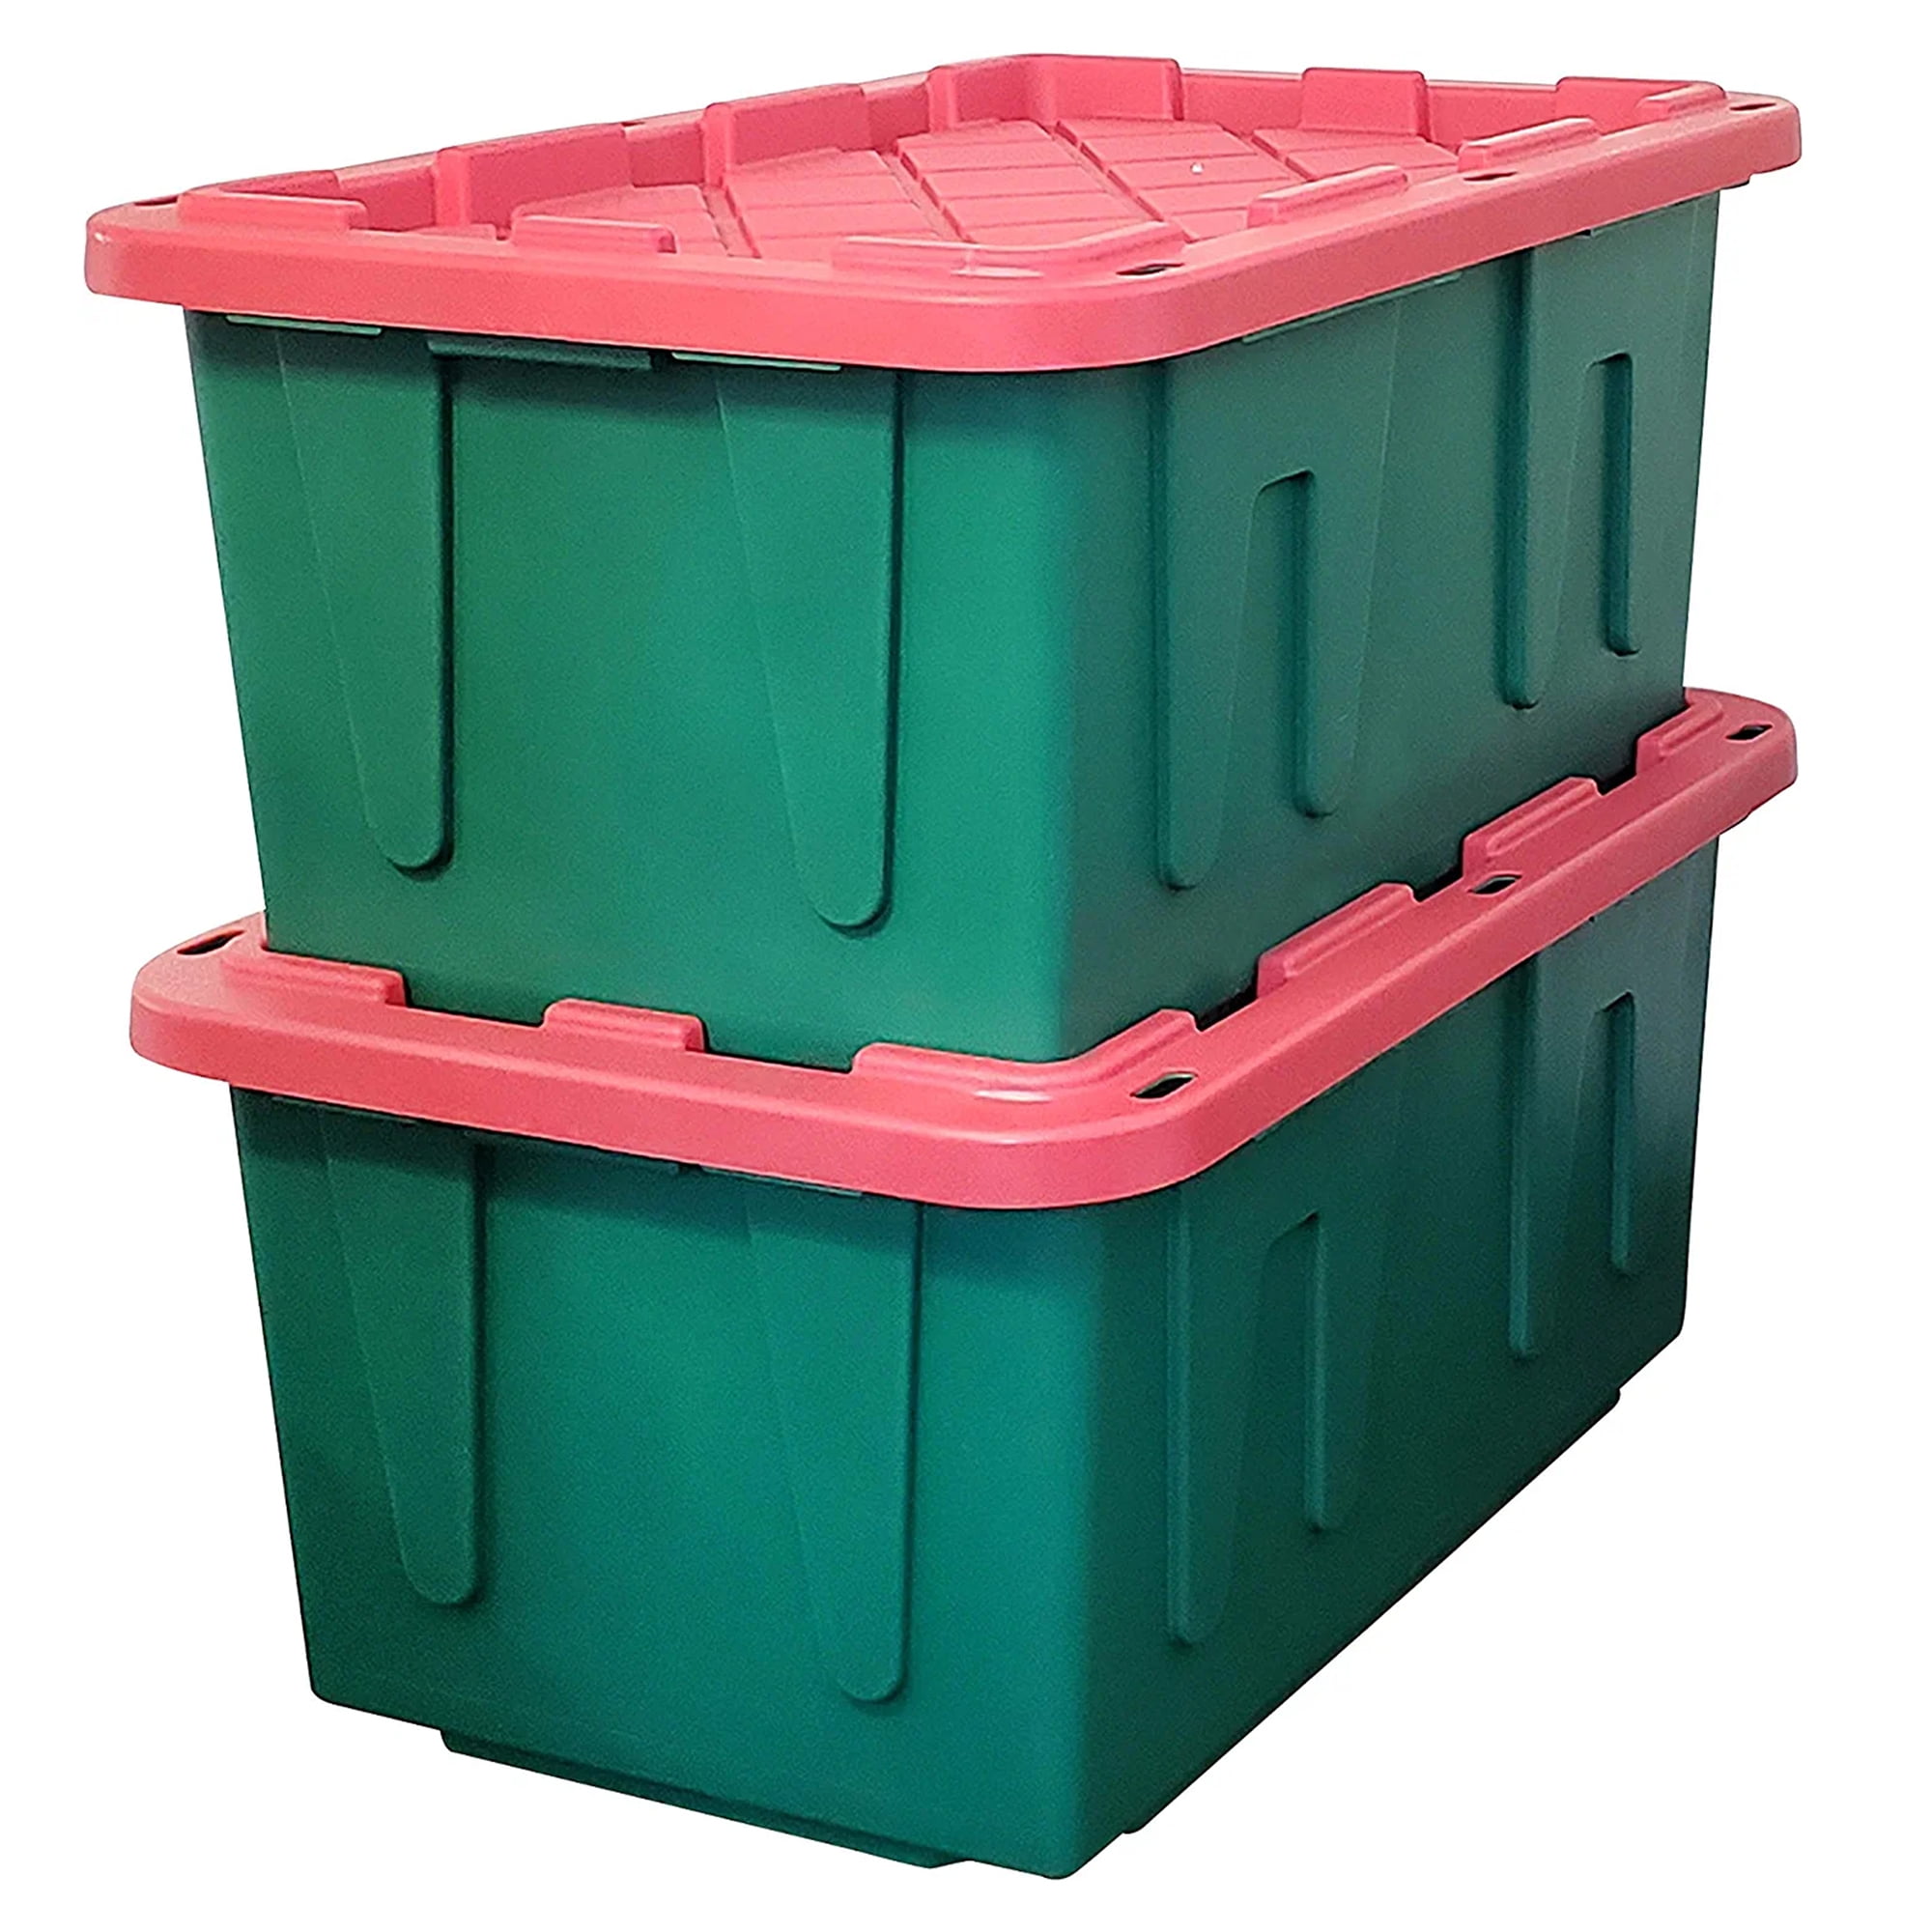 HOMZ Durabilt 27 Gallon Heavy-Duty Holiday Storage Tote, Green/Red (2 Pack)  